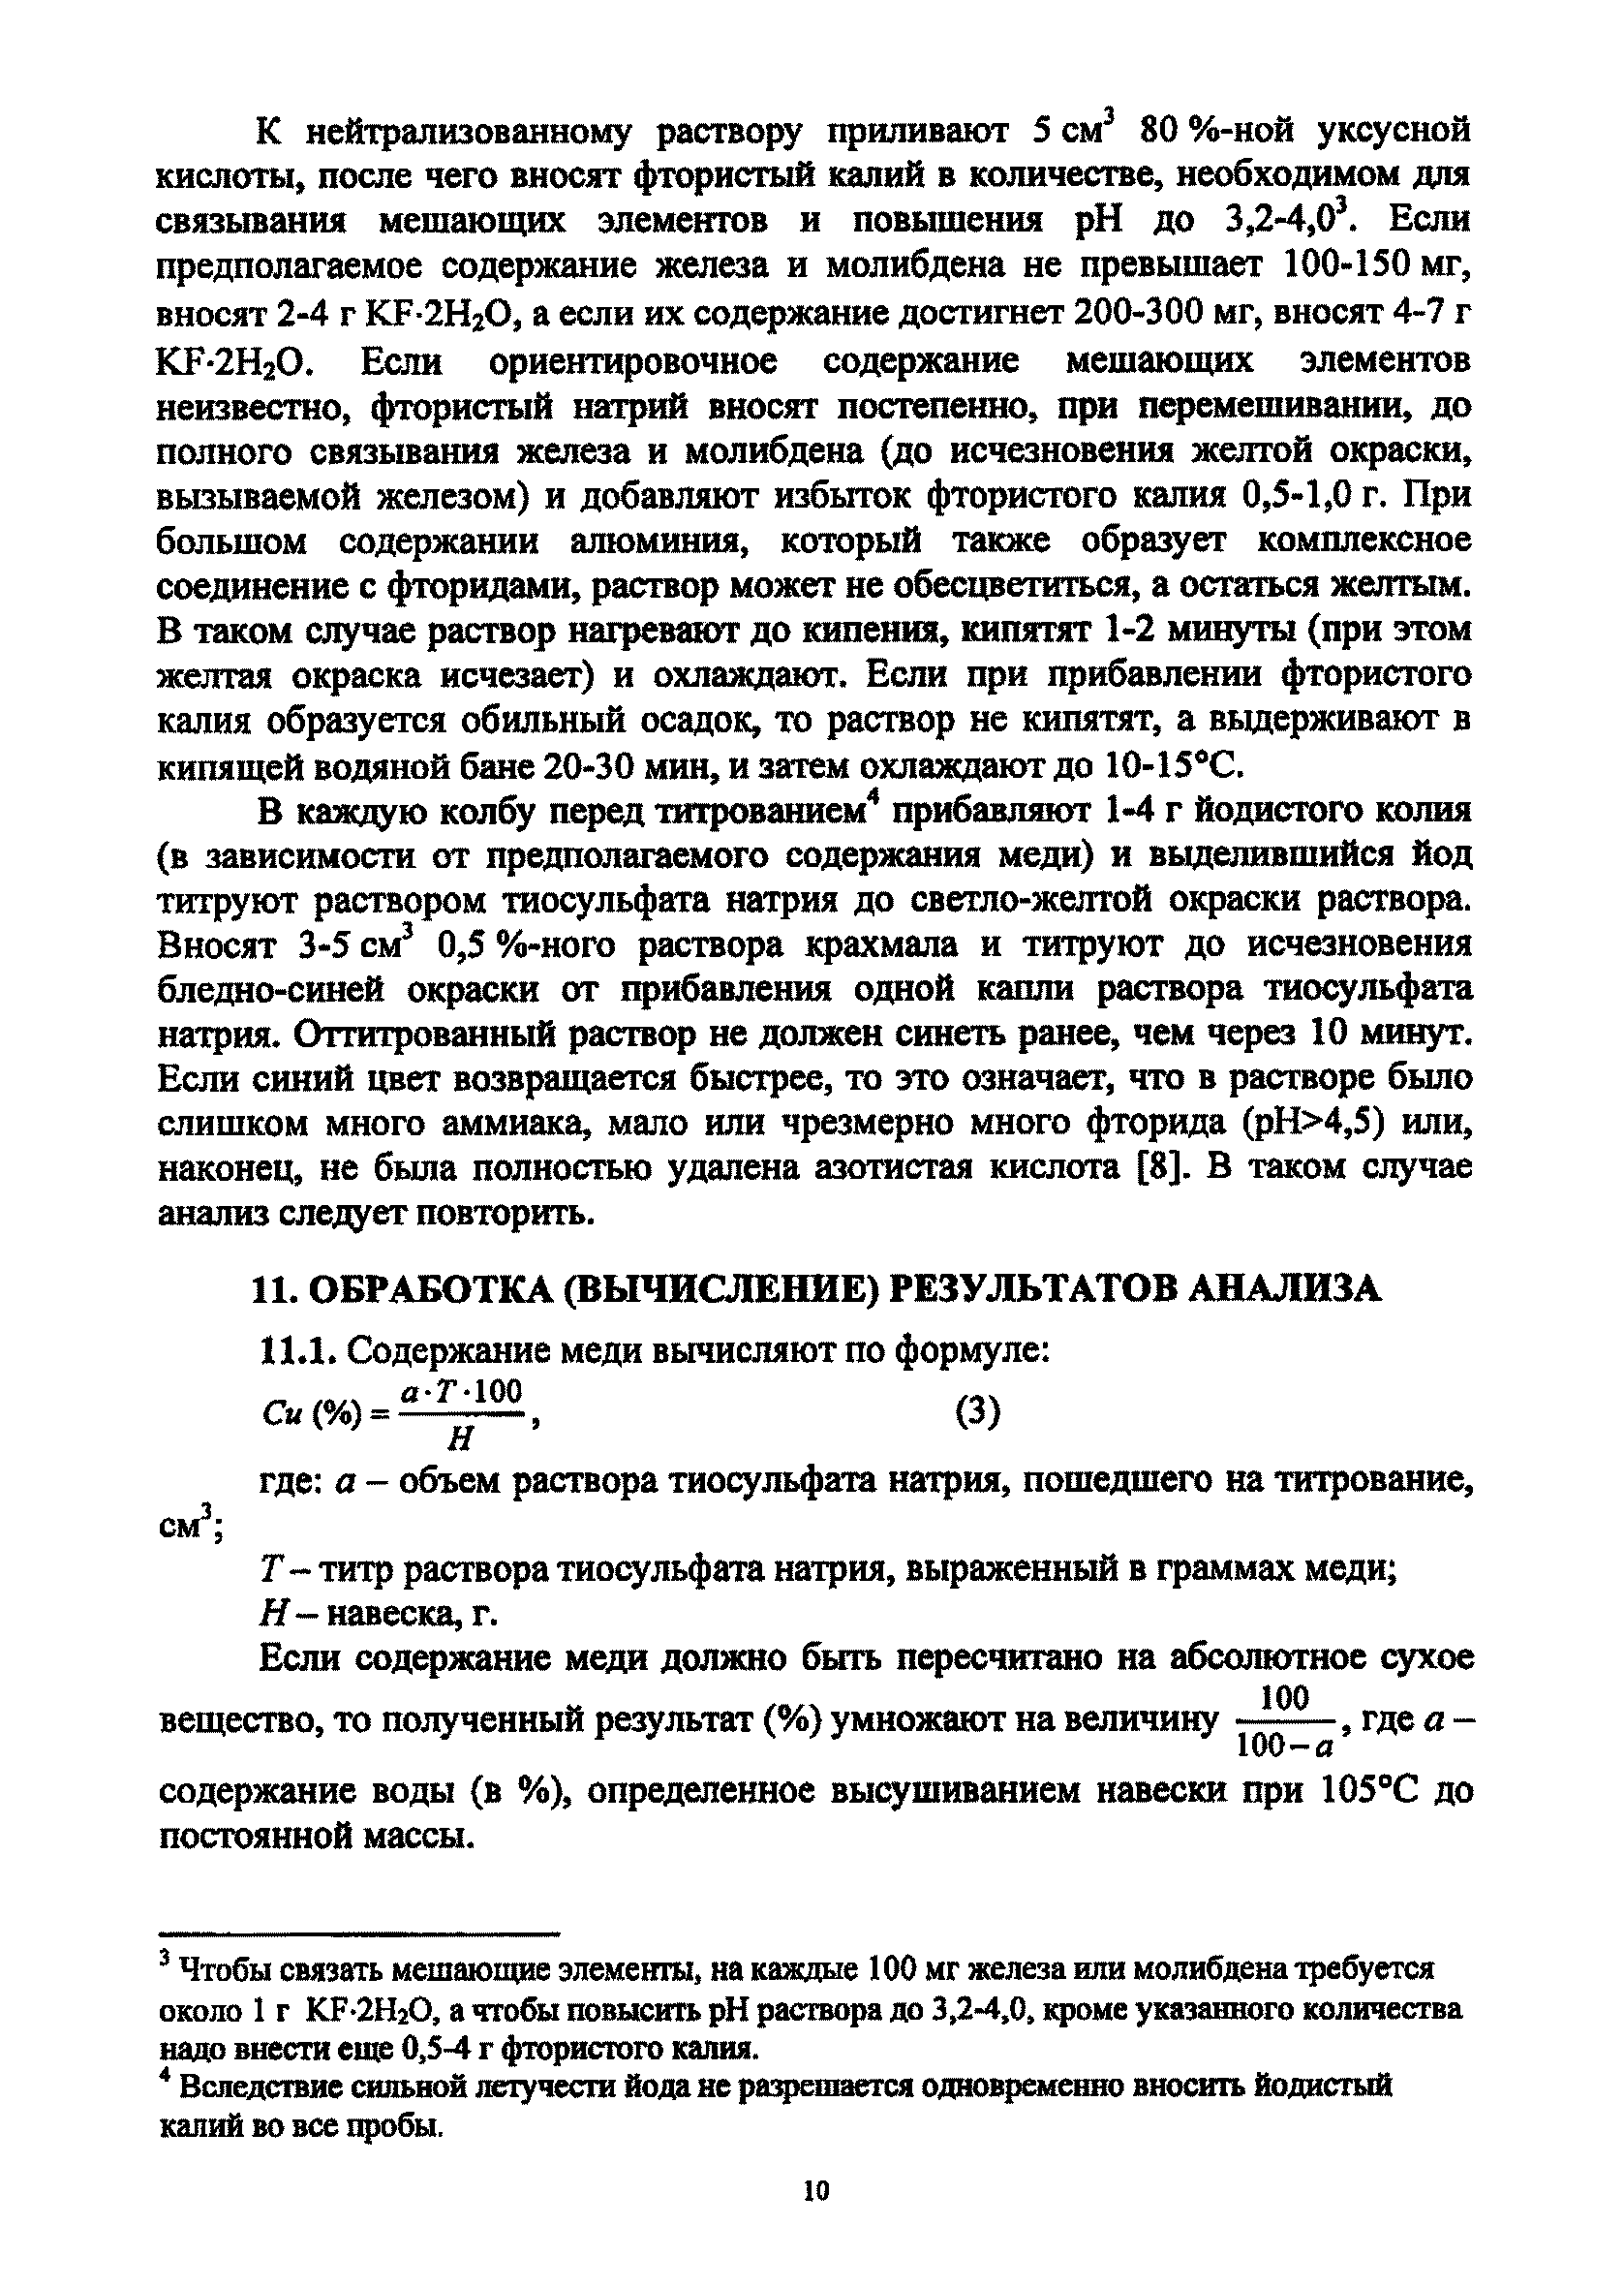 Методика НСАМ 109-Х